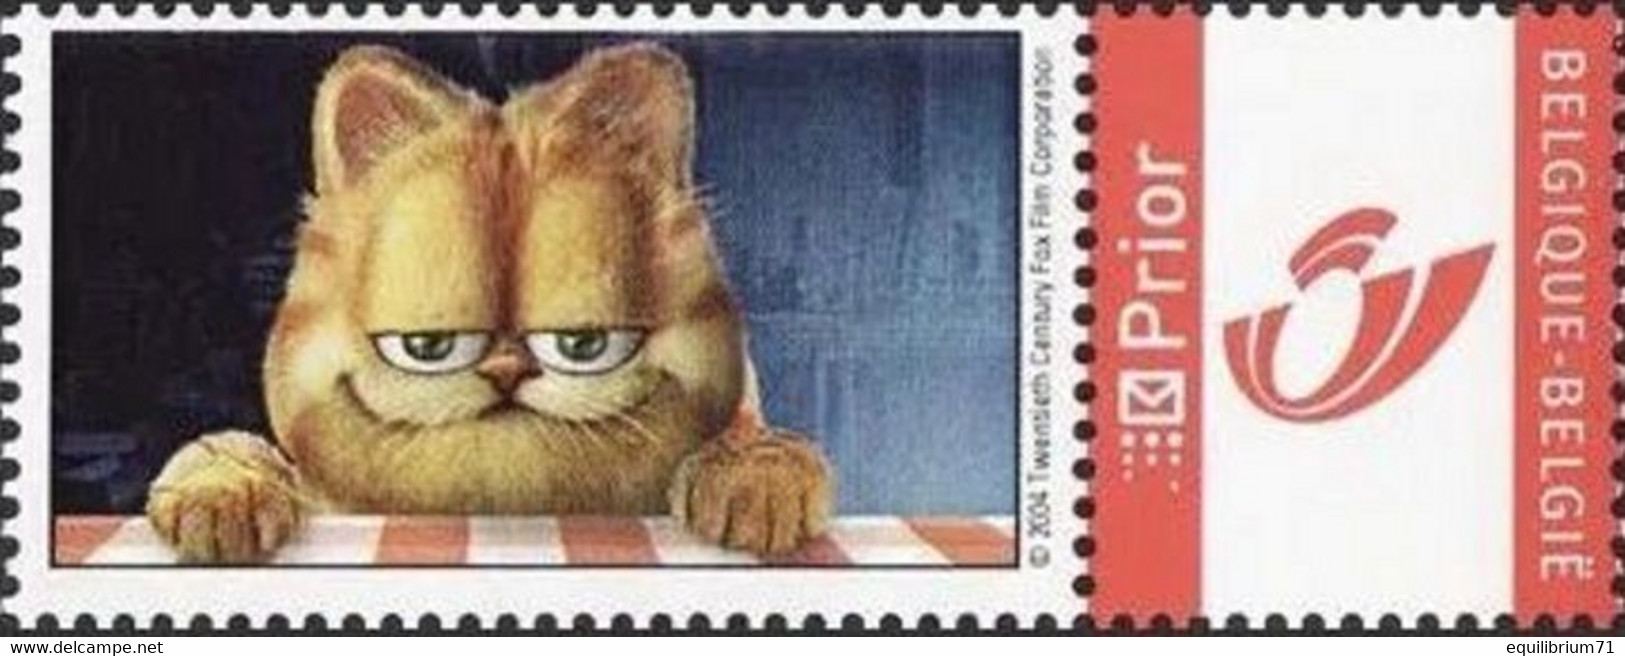 DUOSTAMP** / MY STAMP** - Garfield - Garfield The Movie - Chat / Kat / Katze / Cat - Postfris